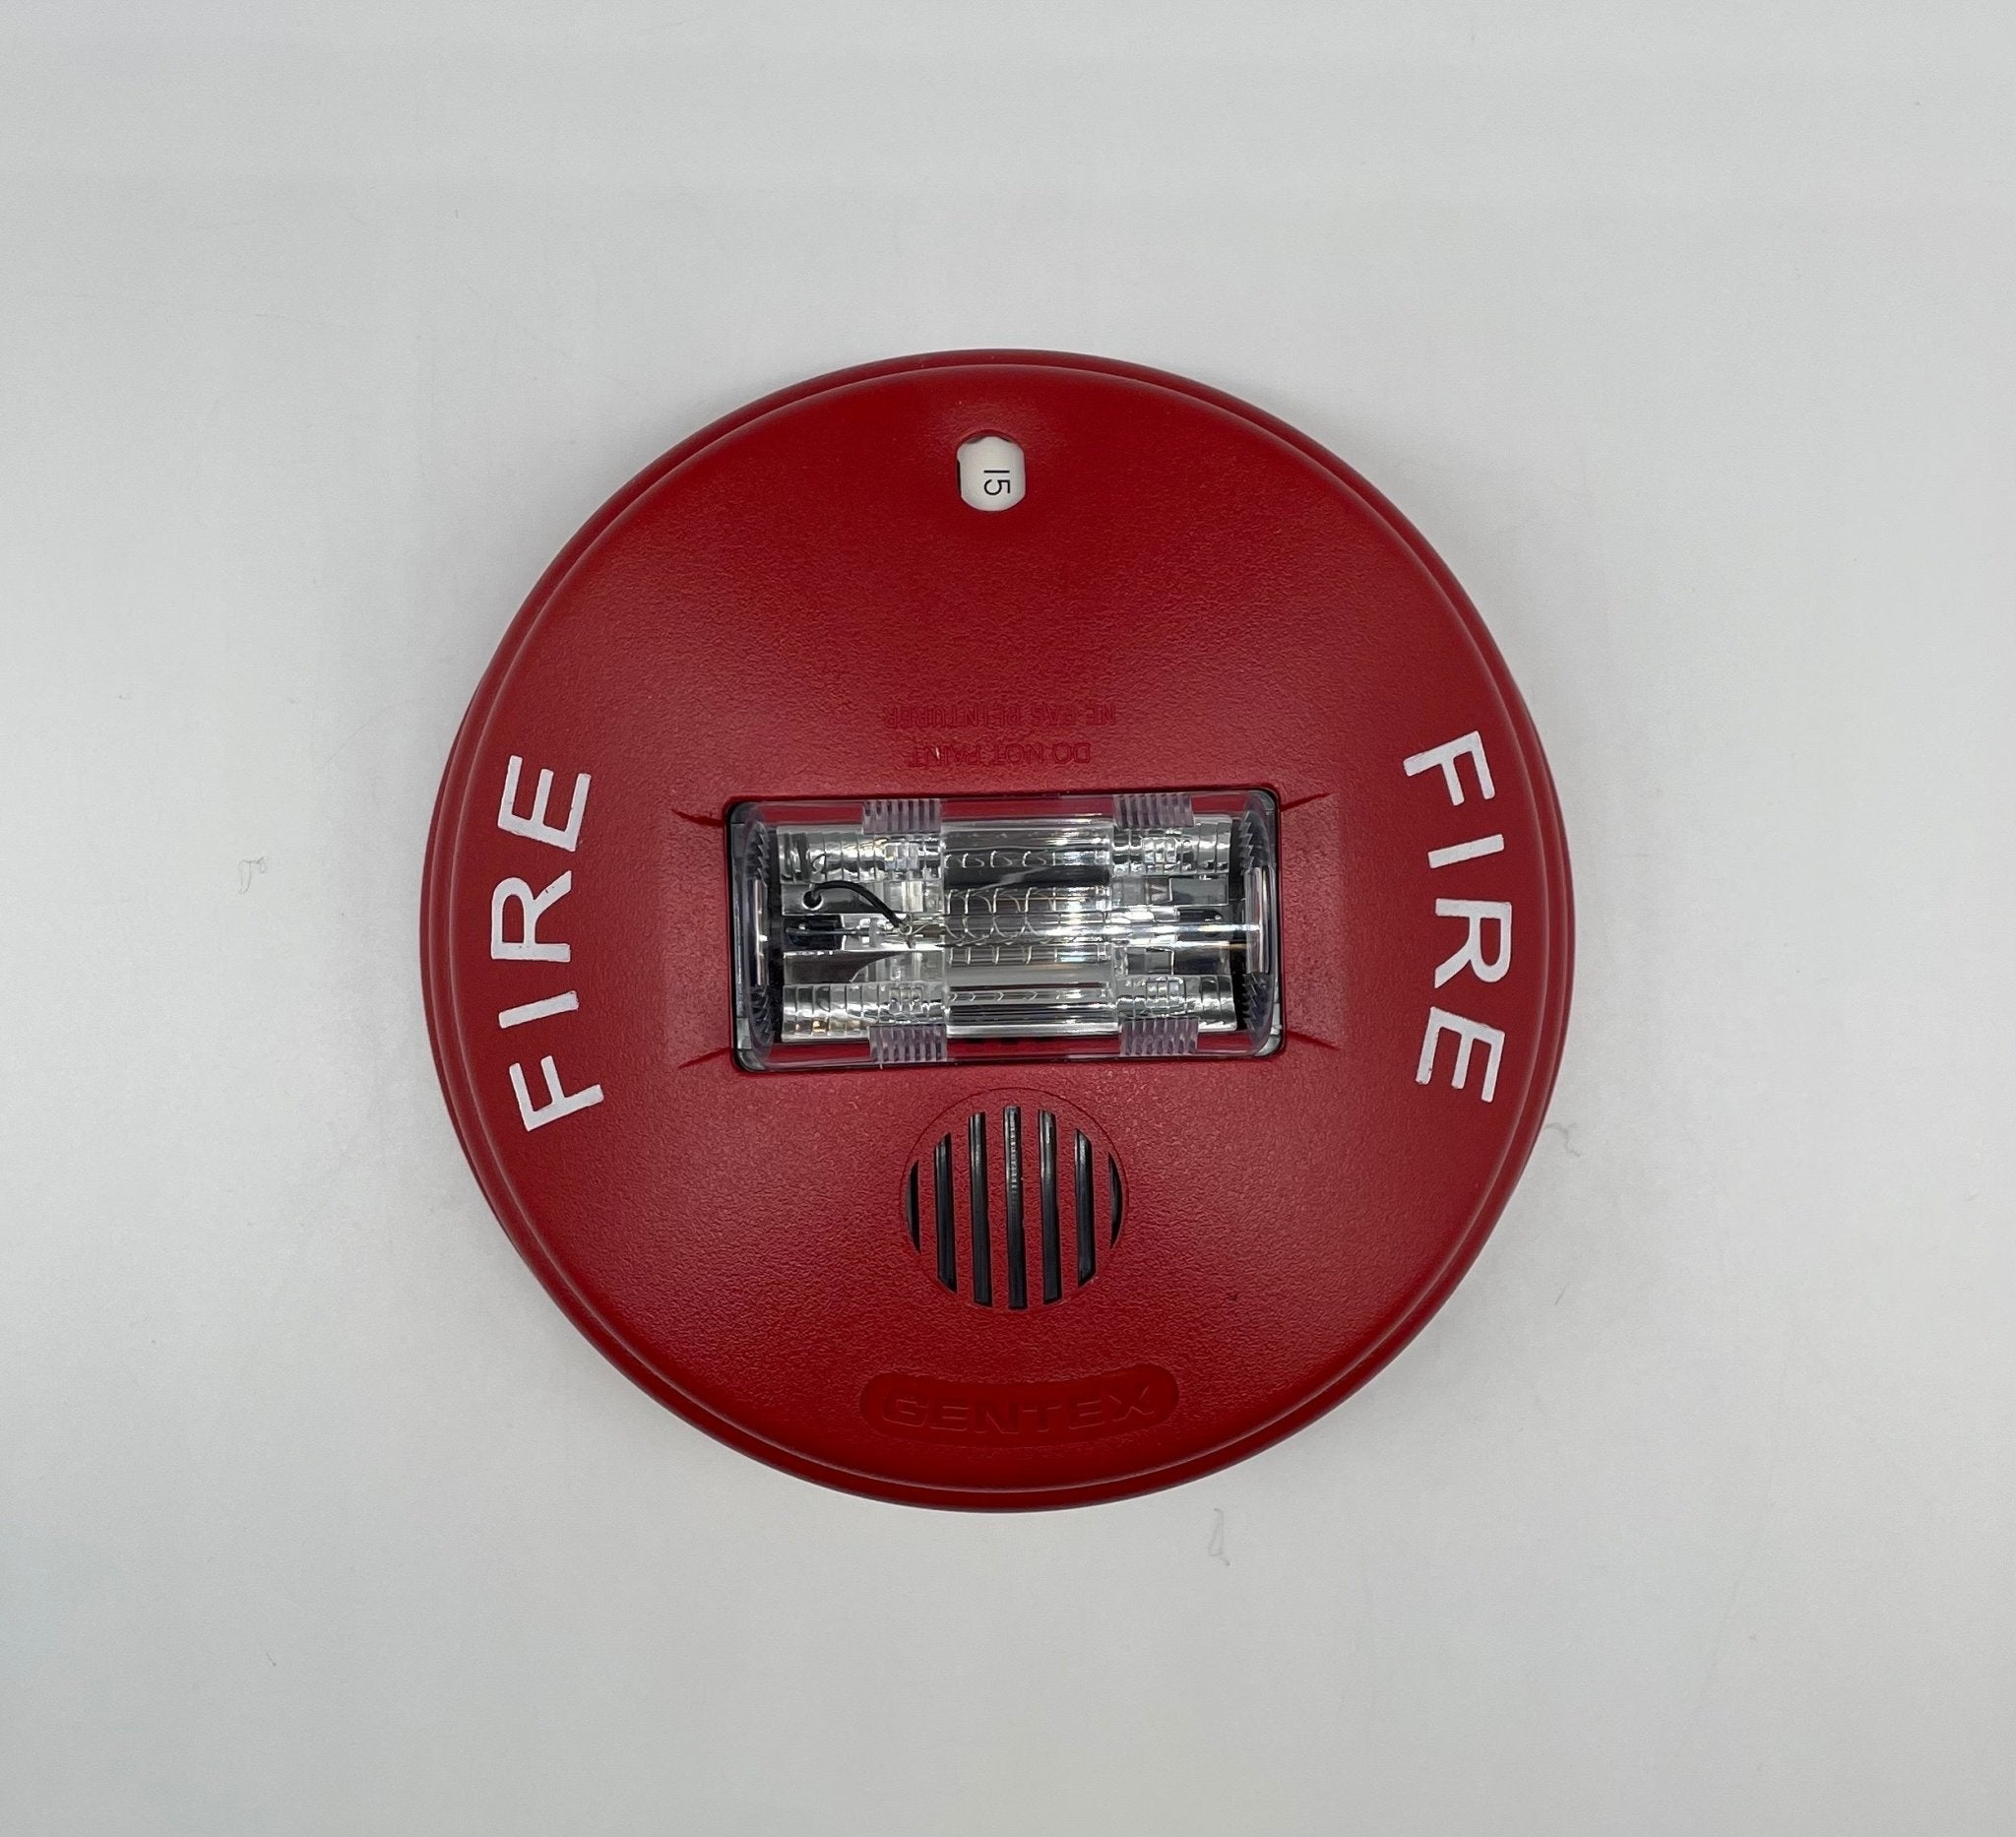 Gentex GCC24CR - The Fire Alarm Supplier